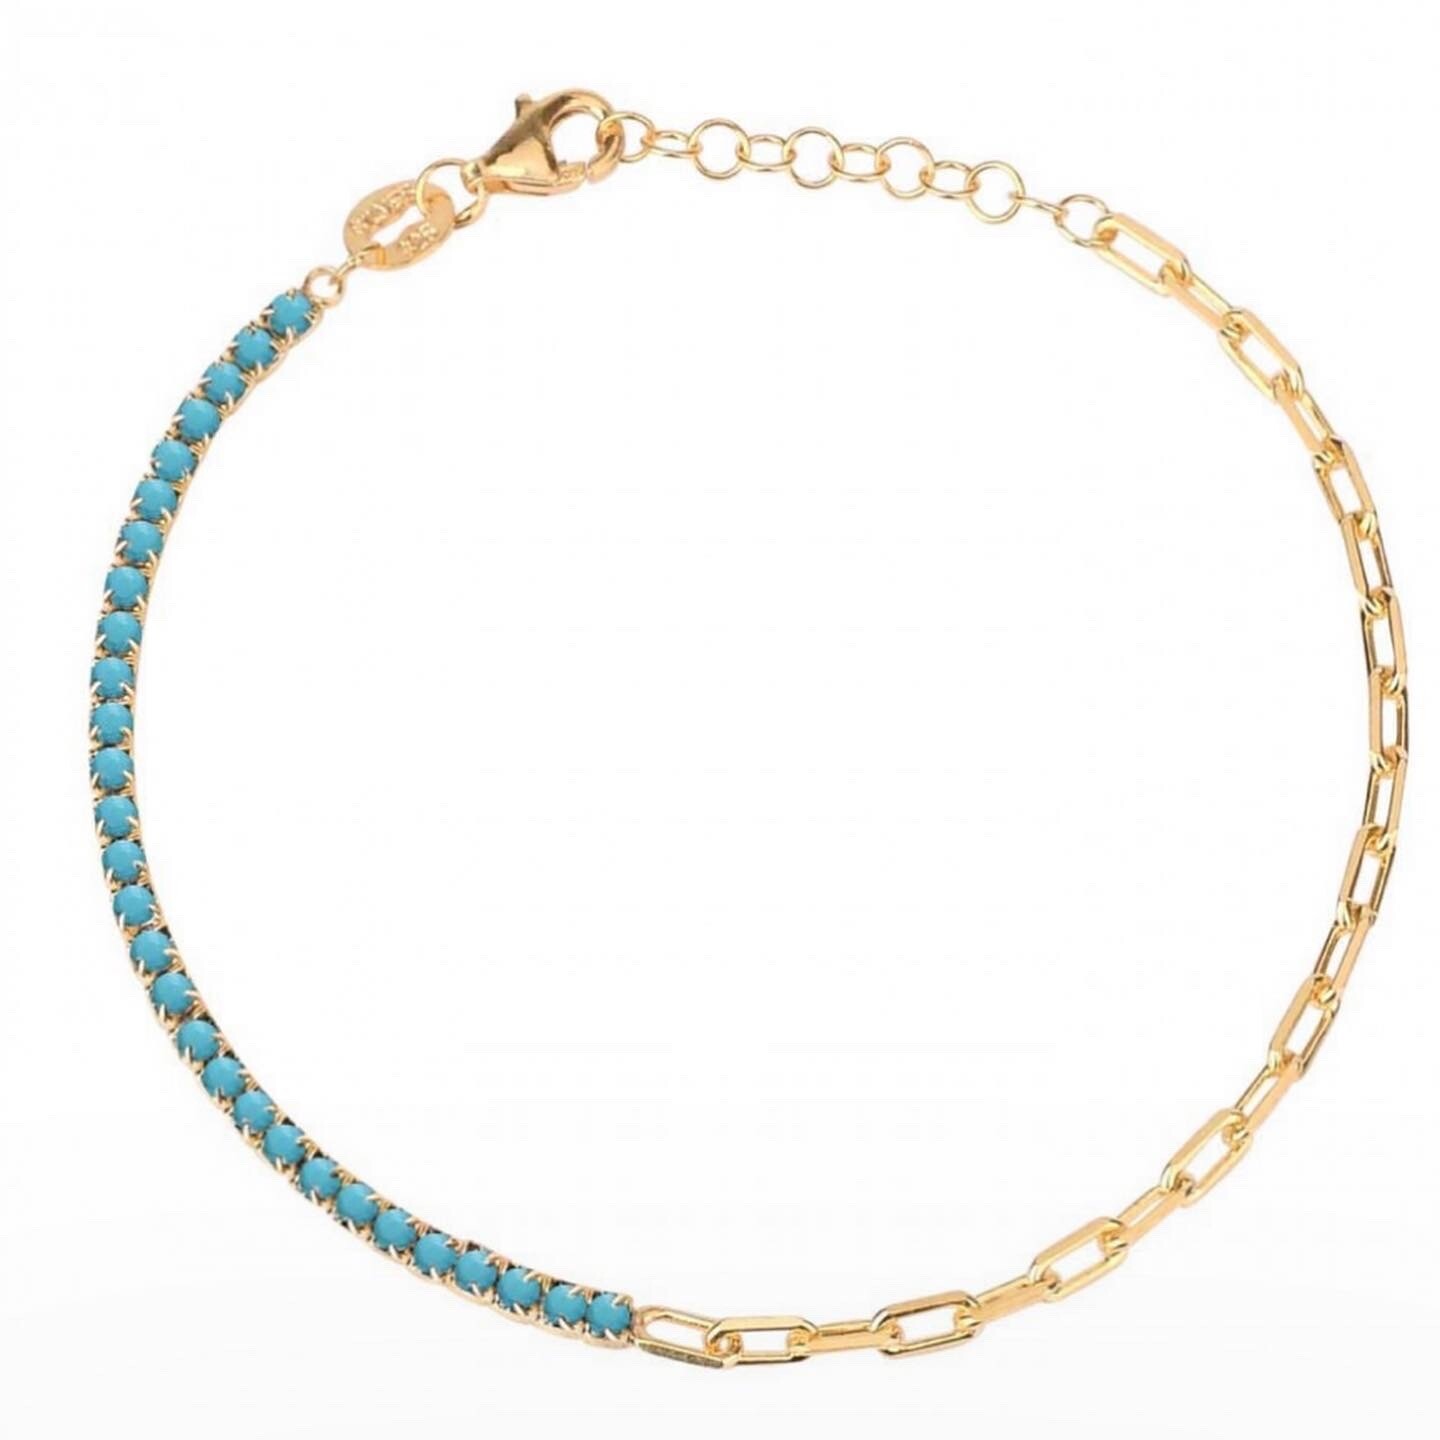 Riviera turquoise bracelet